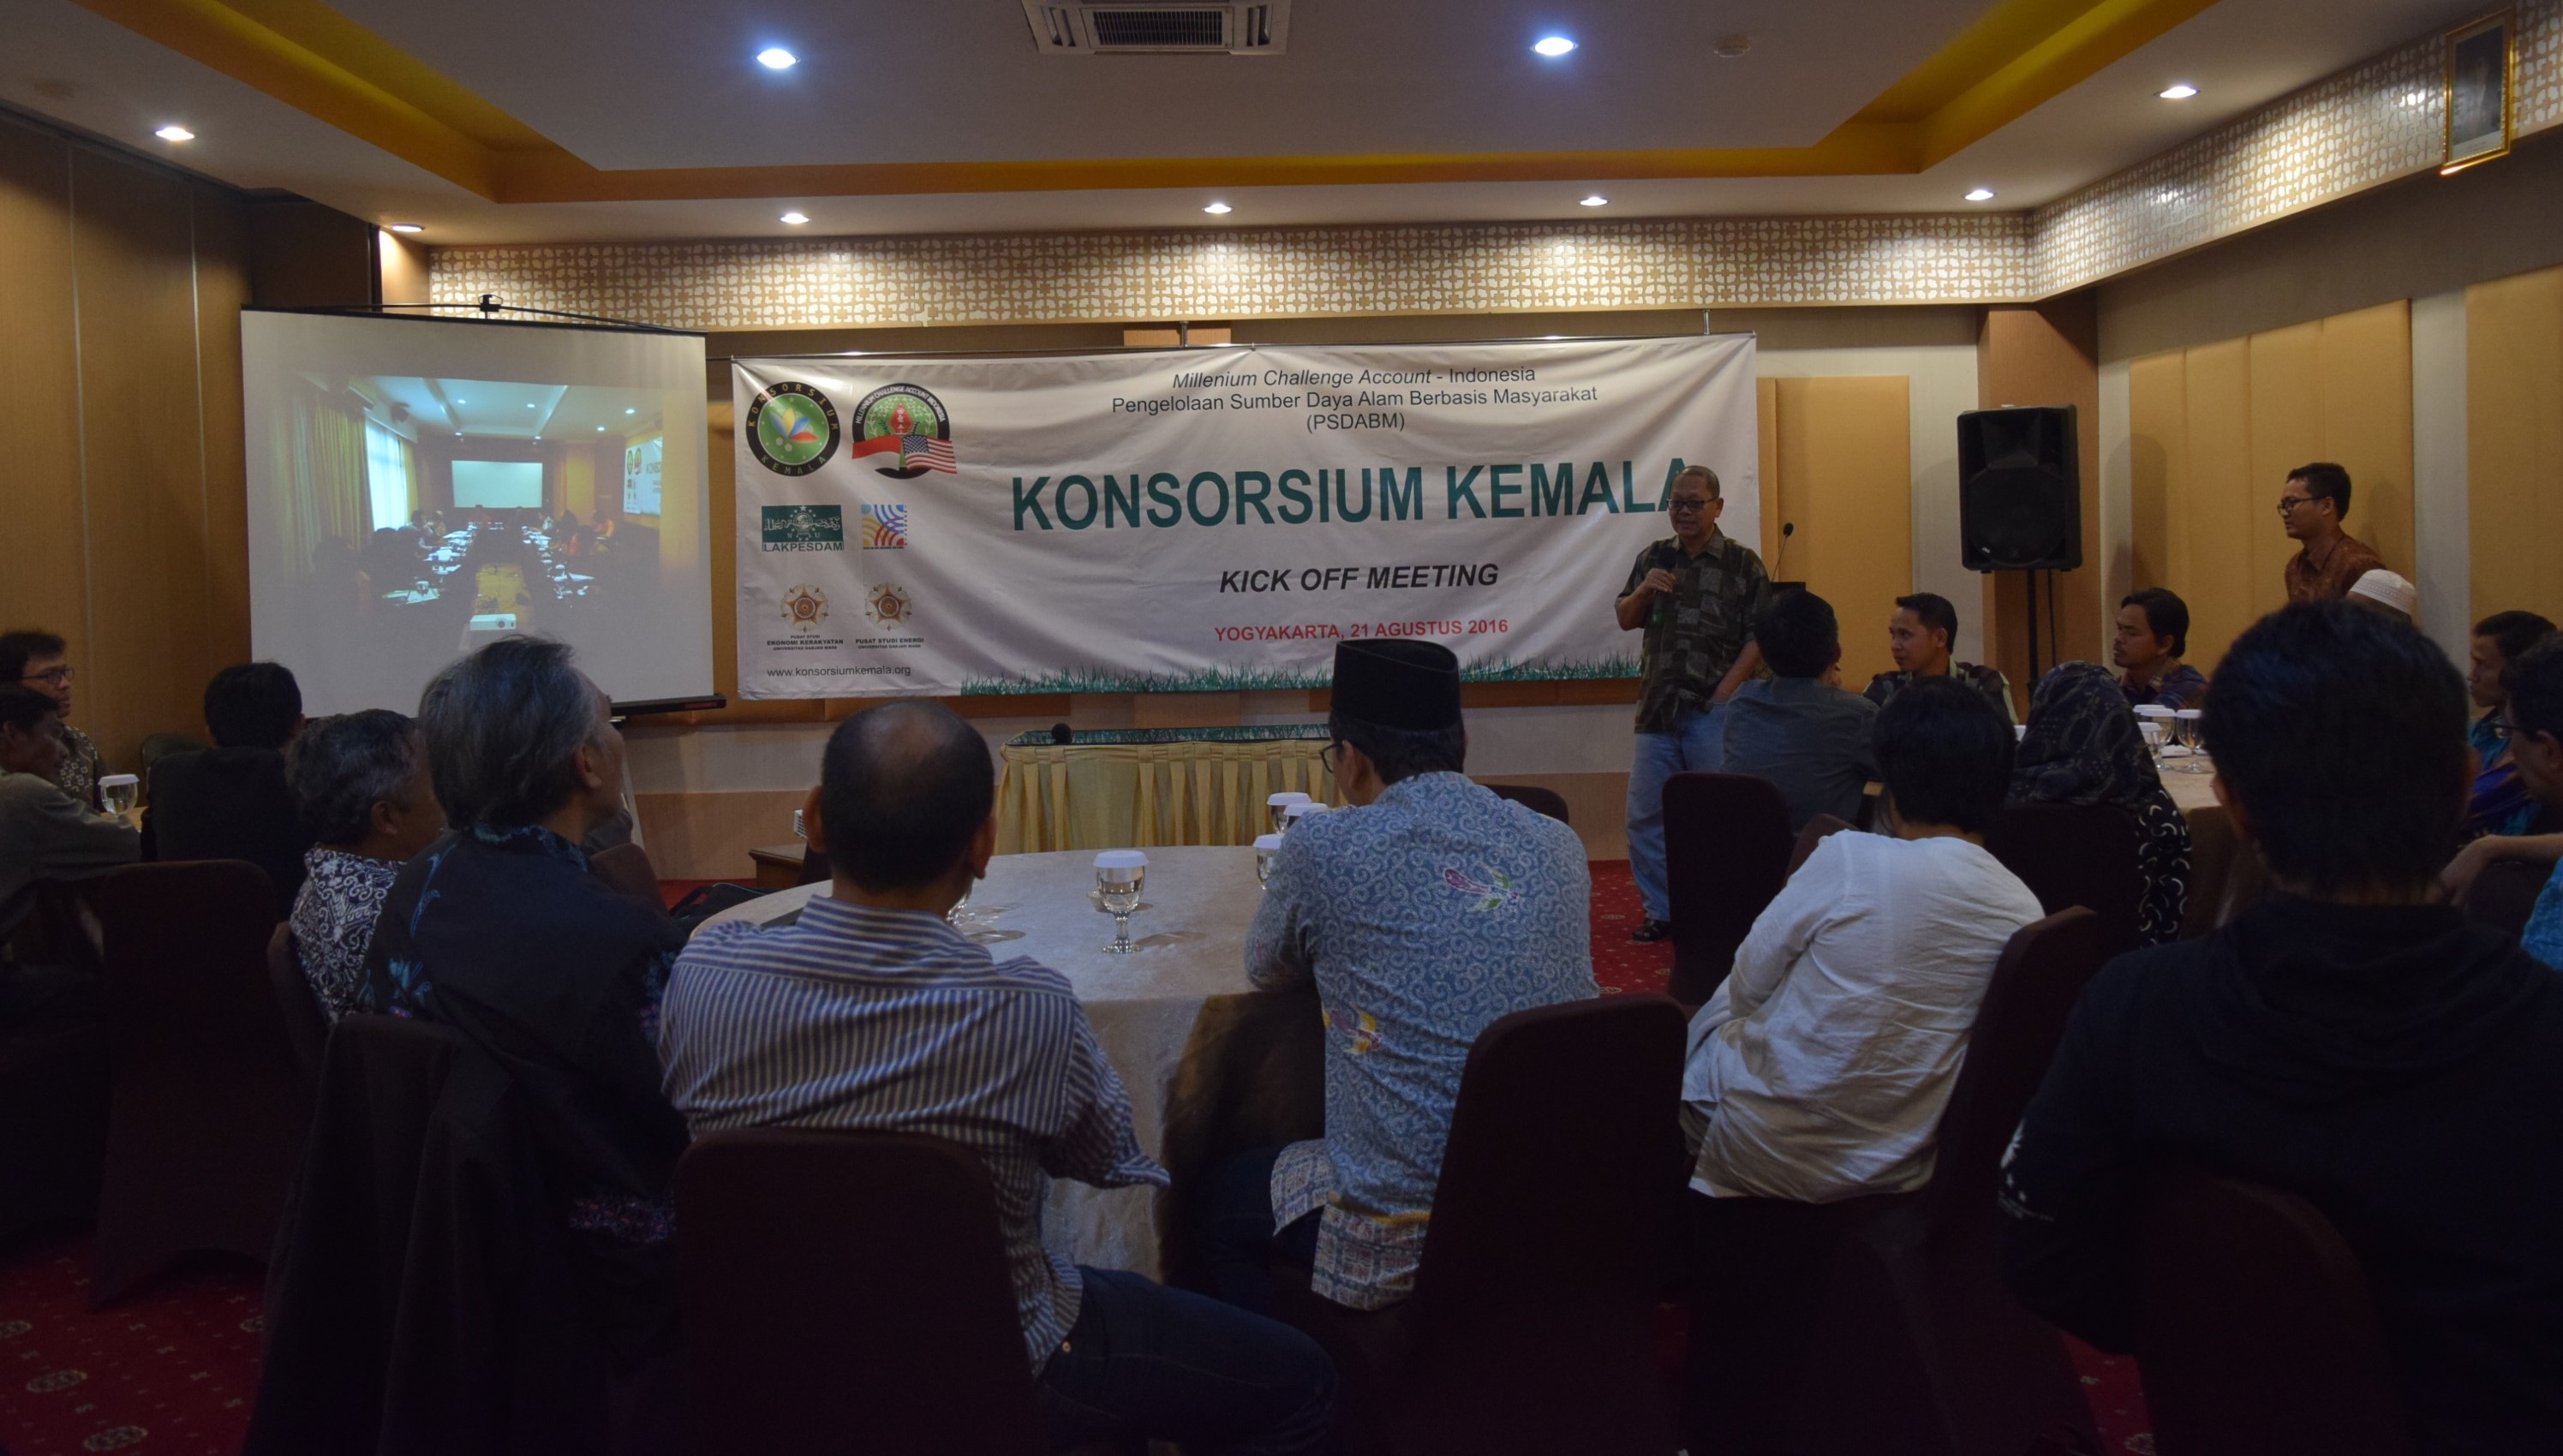 Kick of Meeting and Planning Workshop Konsorsium Kemala